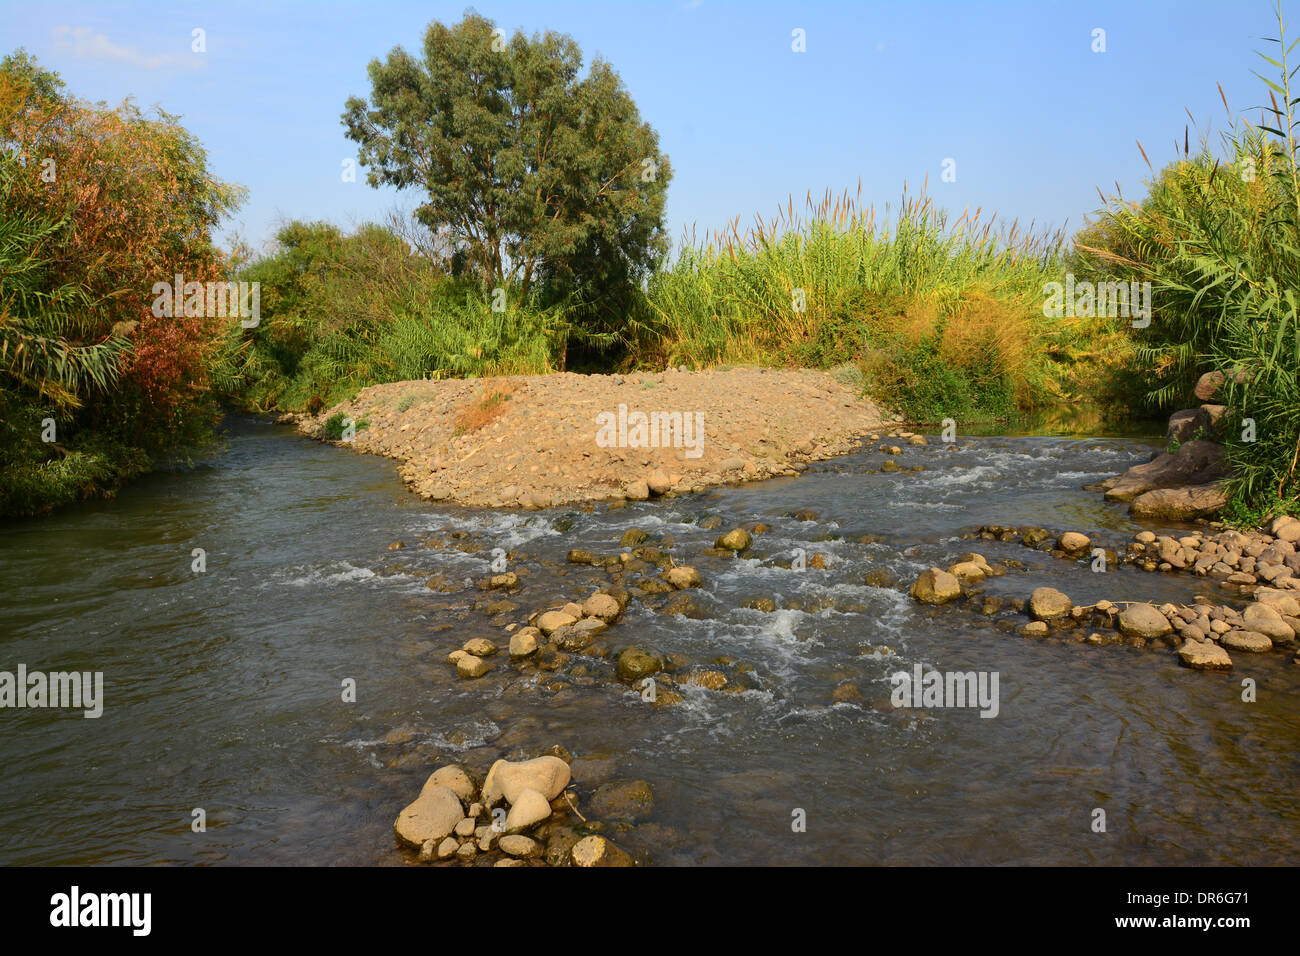 Jordan river Park, Galilee, Israel Stock Photo